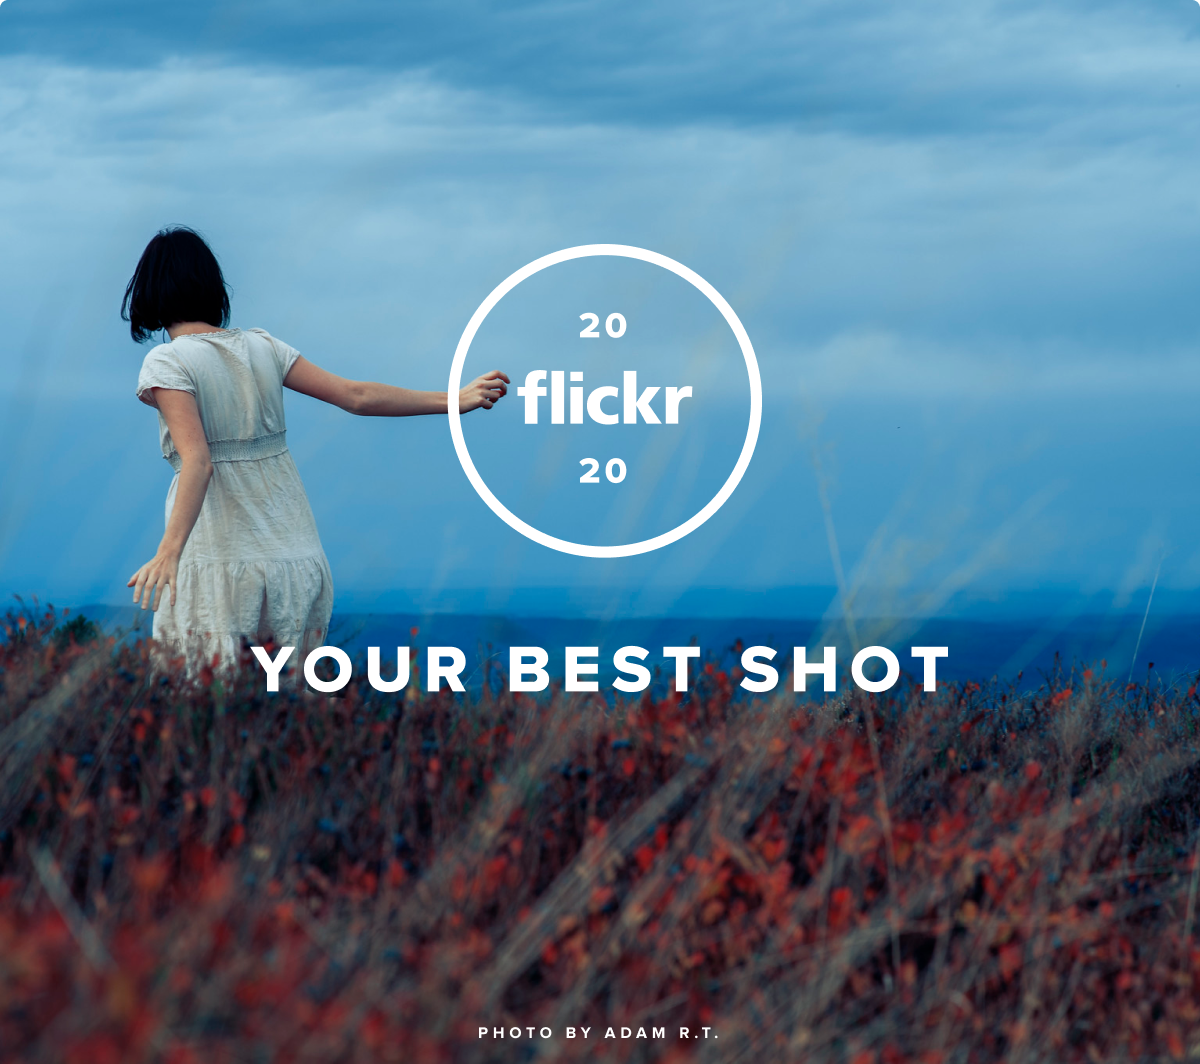 Flickr 最糟糕失敗影像、最佳影像攝影比賽 flickr Your Best shot contest 2020